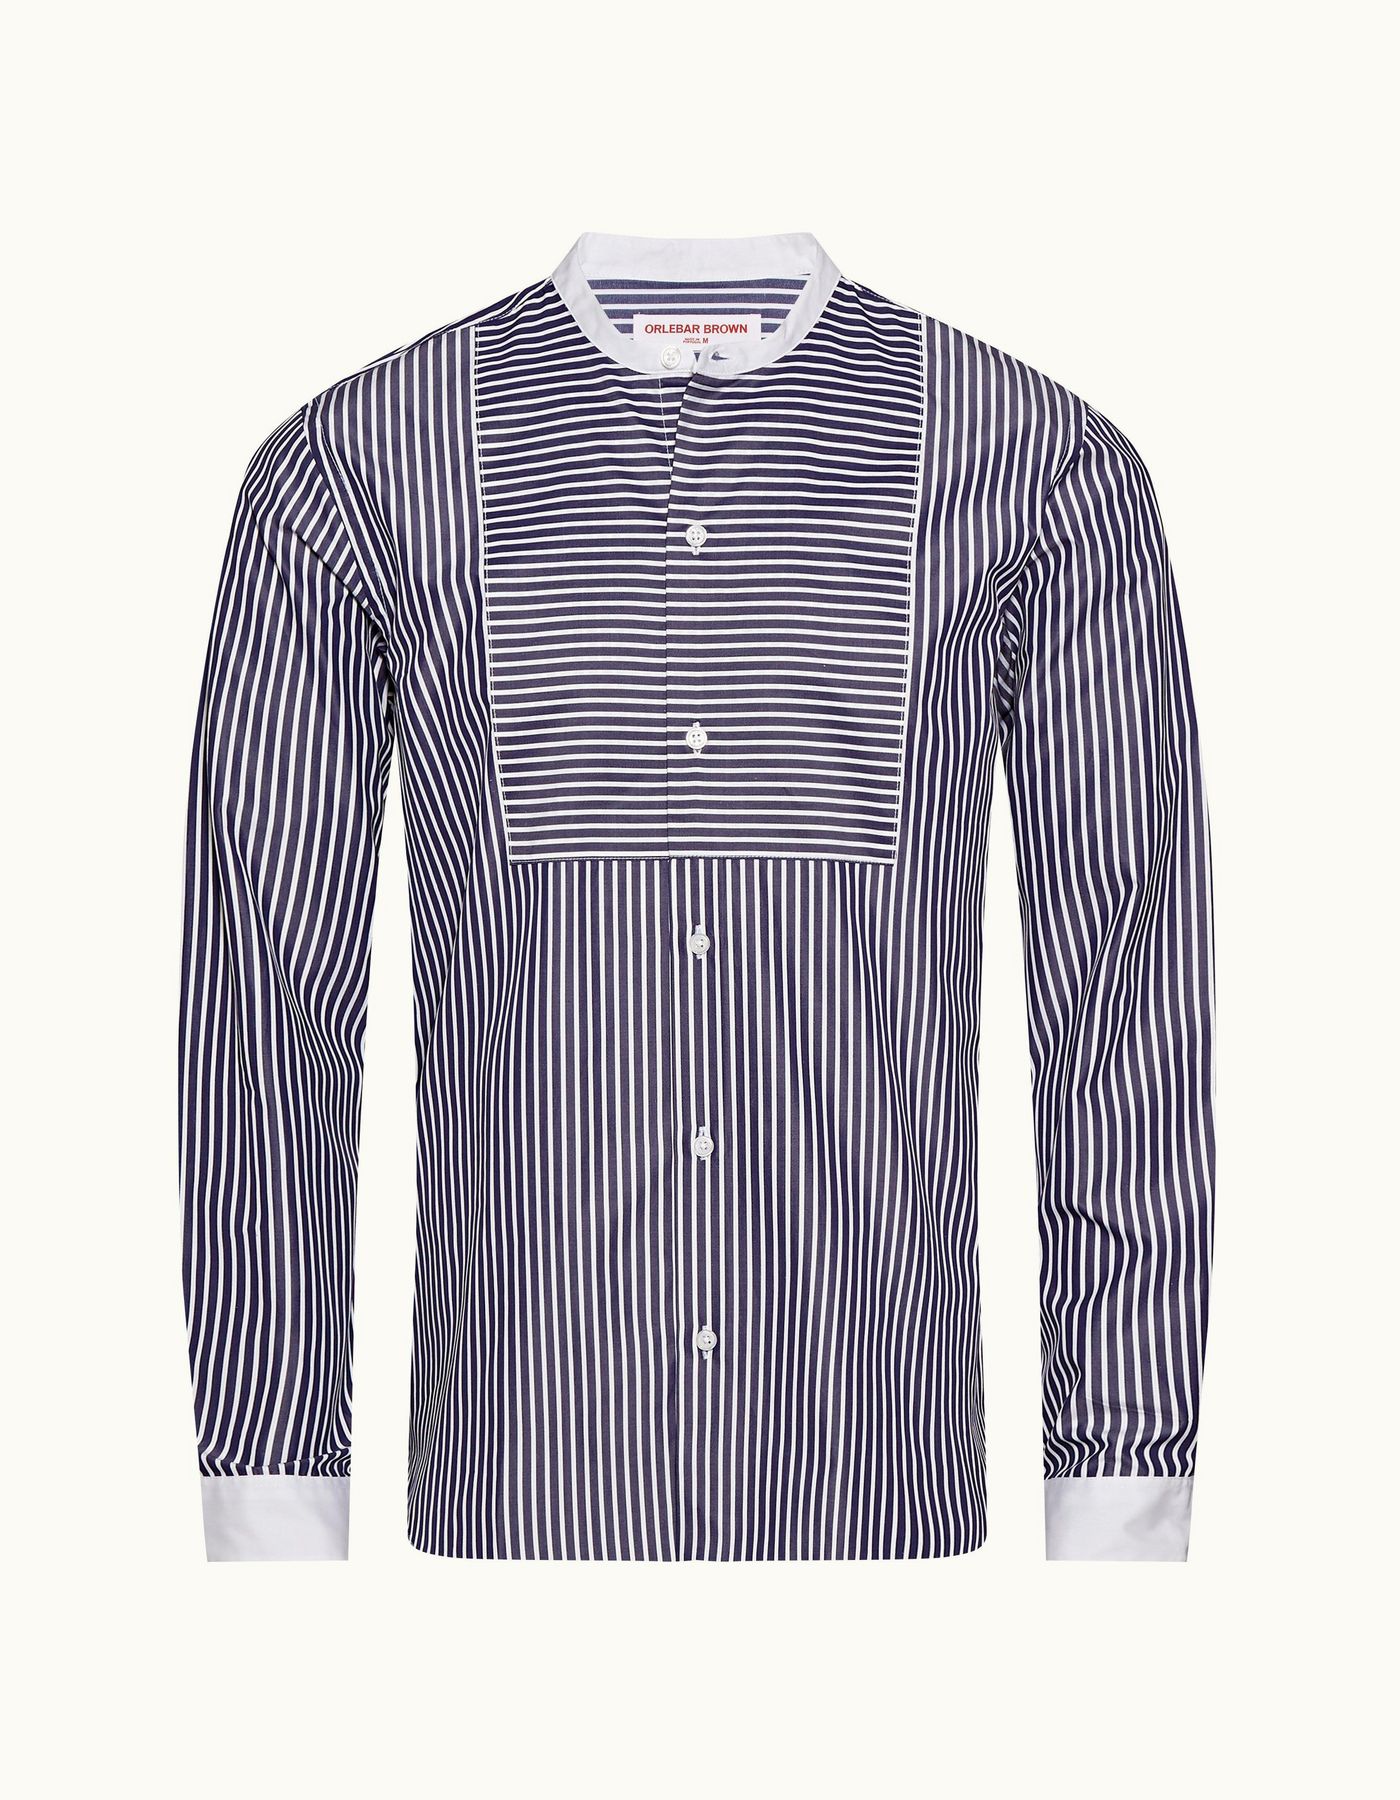 Joulter - Mens Ink/Cloud Stripe Grandad Collar Shirt